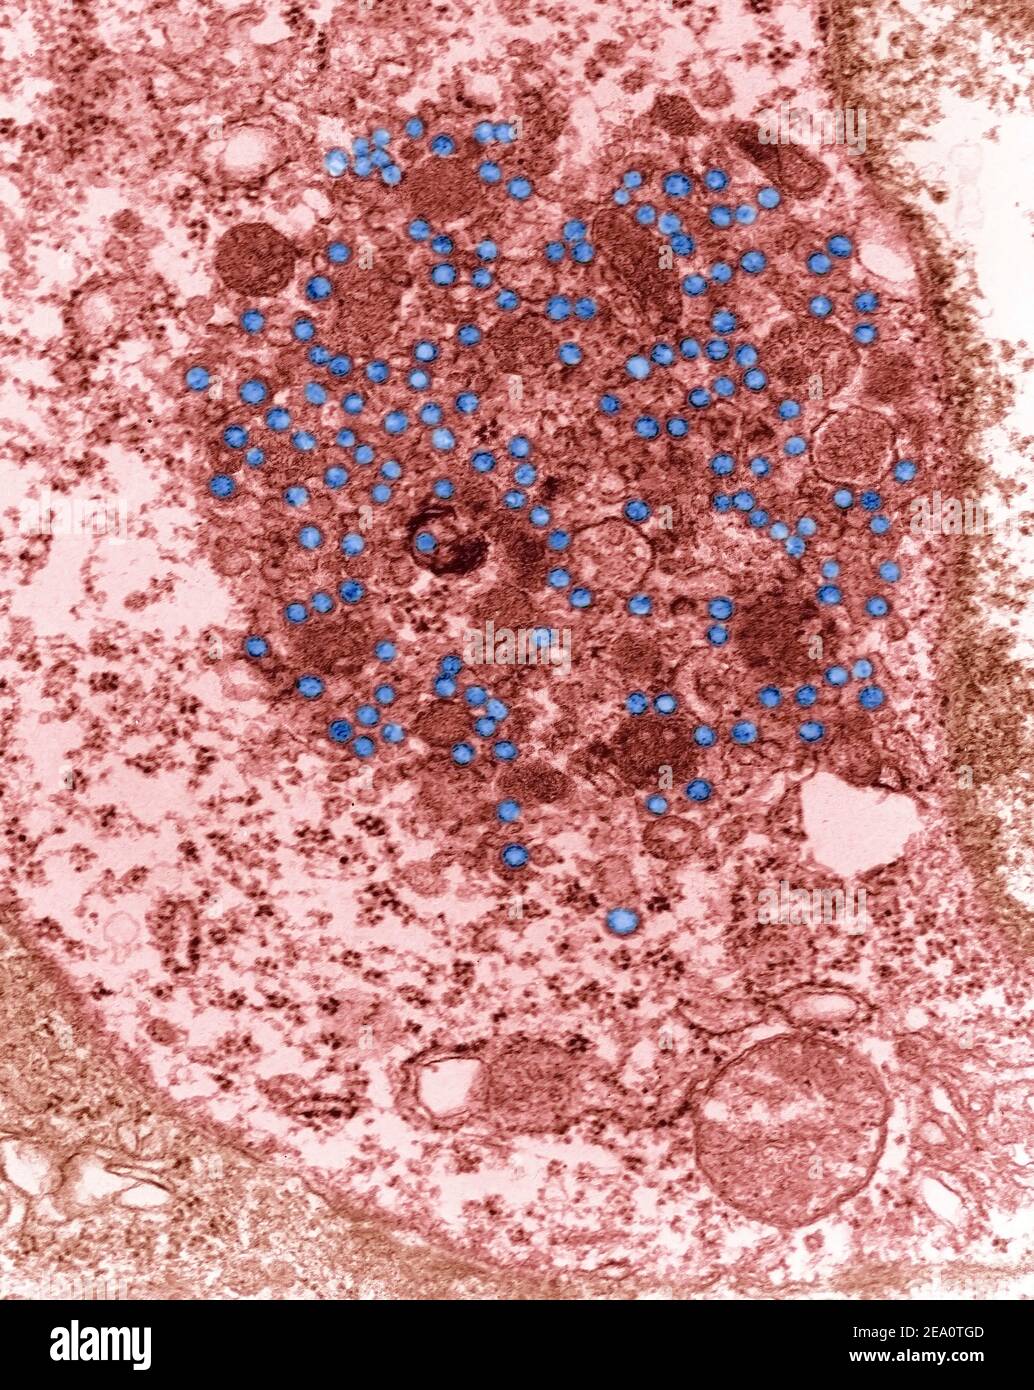 Maus Mammatumor Virus, TEM Stockfoto